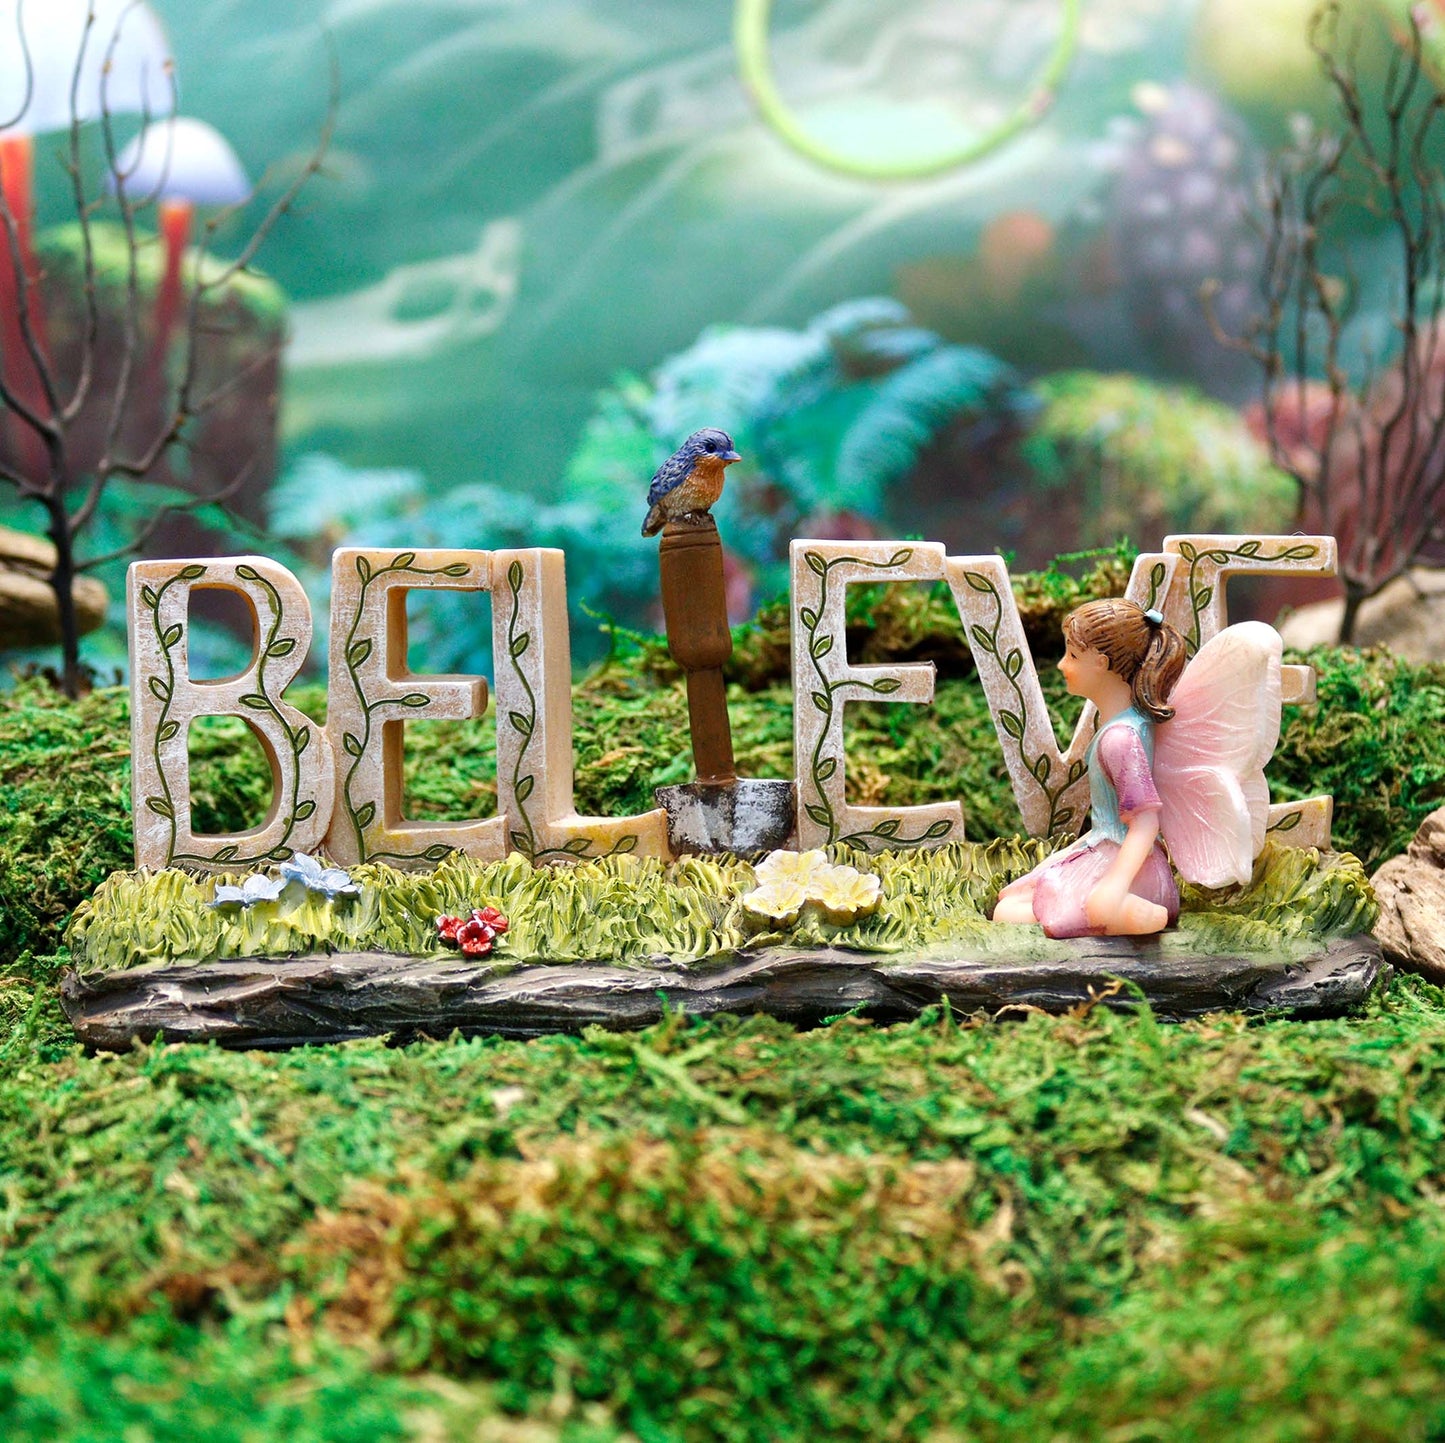 "Believe" Fairy Garden Monument